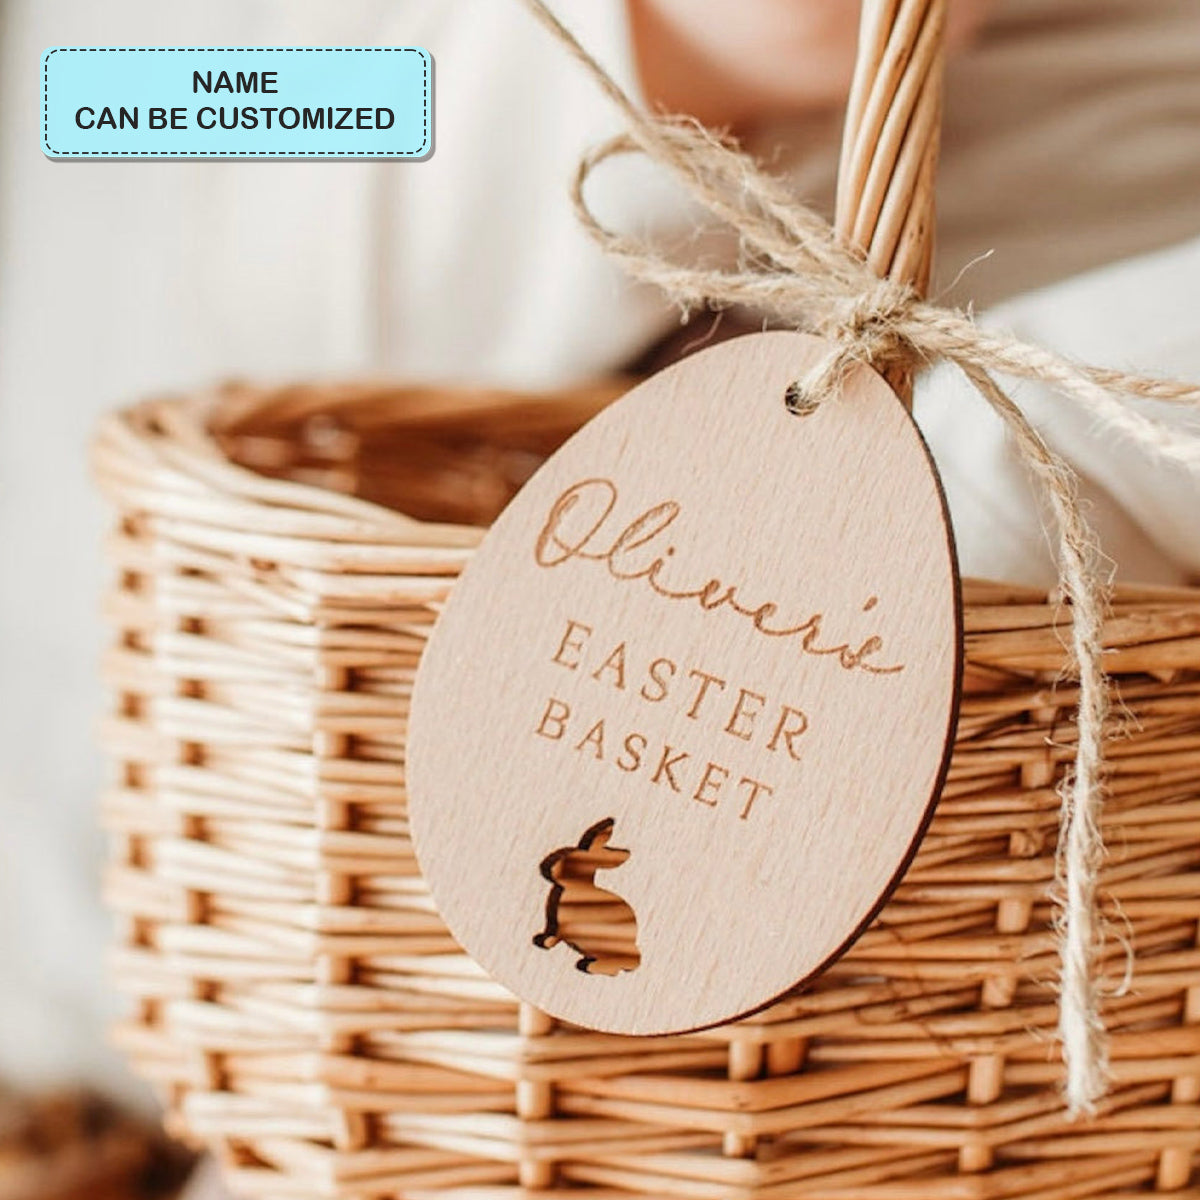 Kid's Easter Basket - Personalized Custom Basket Tag - Easter Gift For Family Members, Grandma, Mom